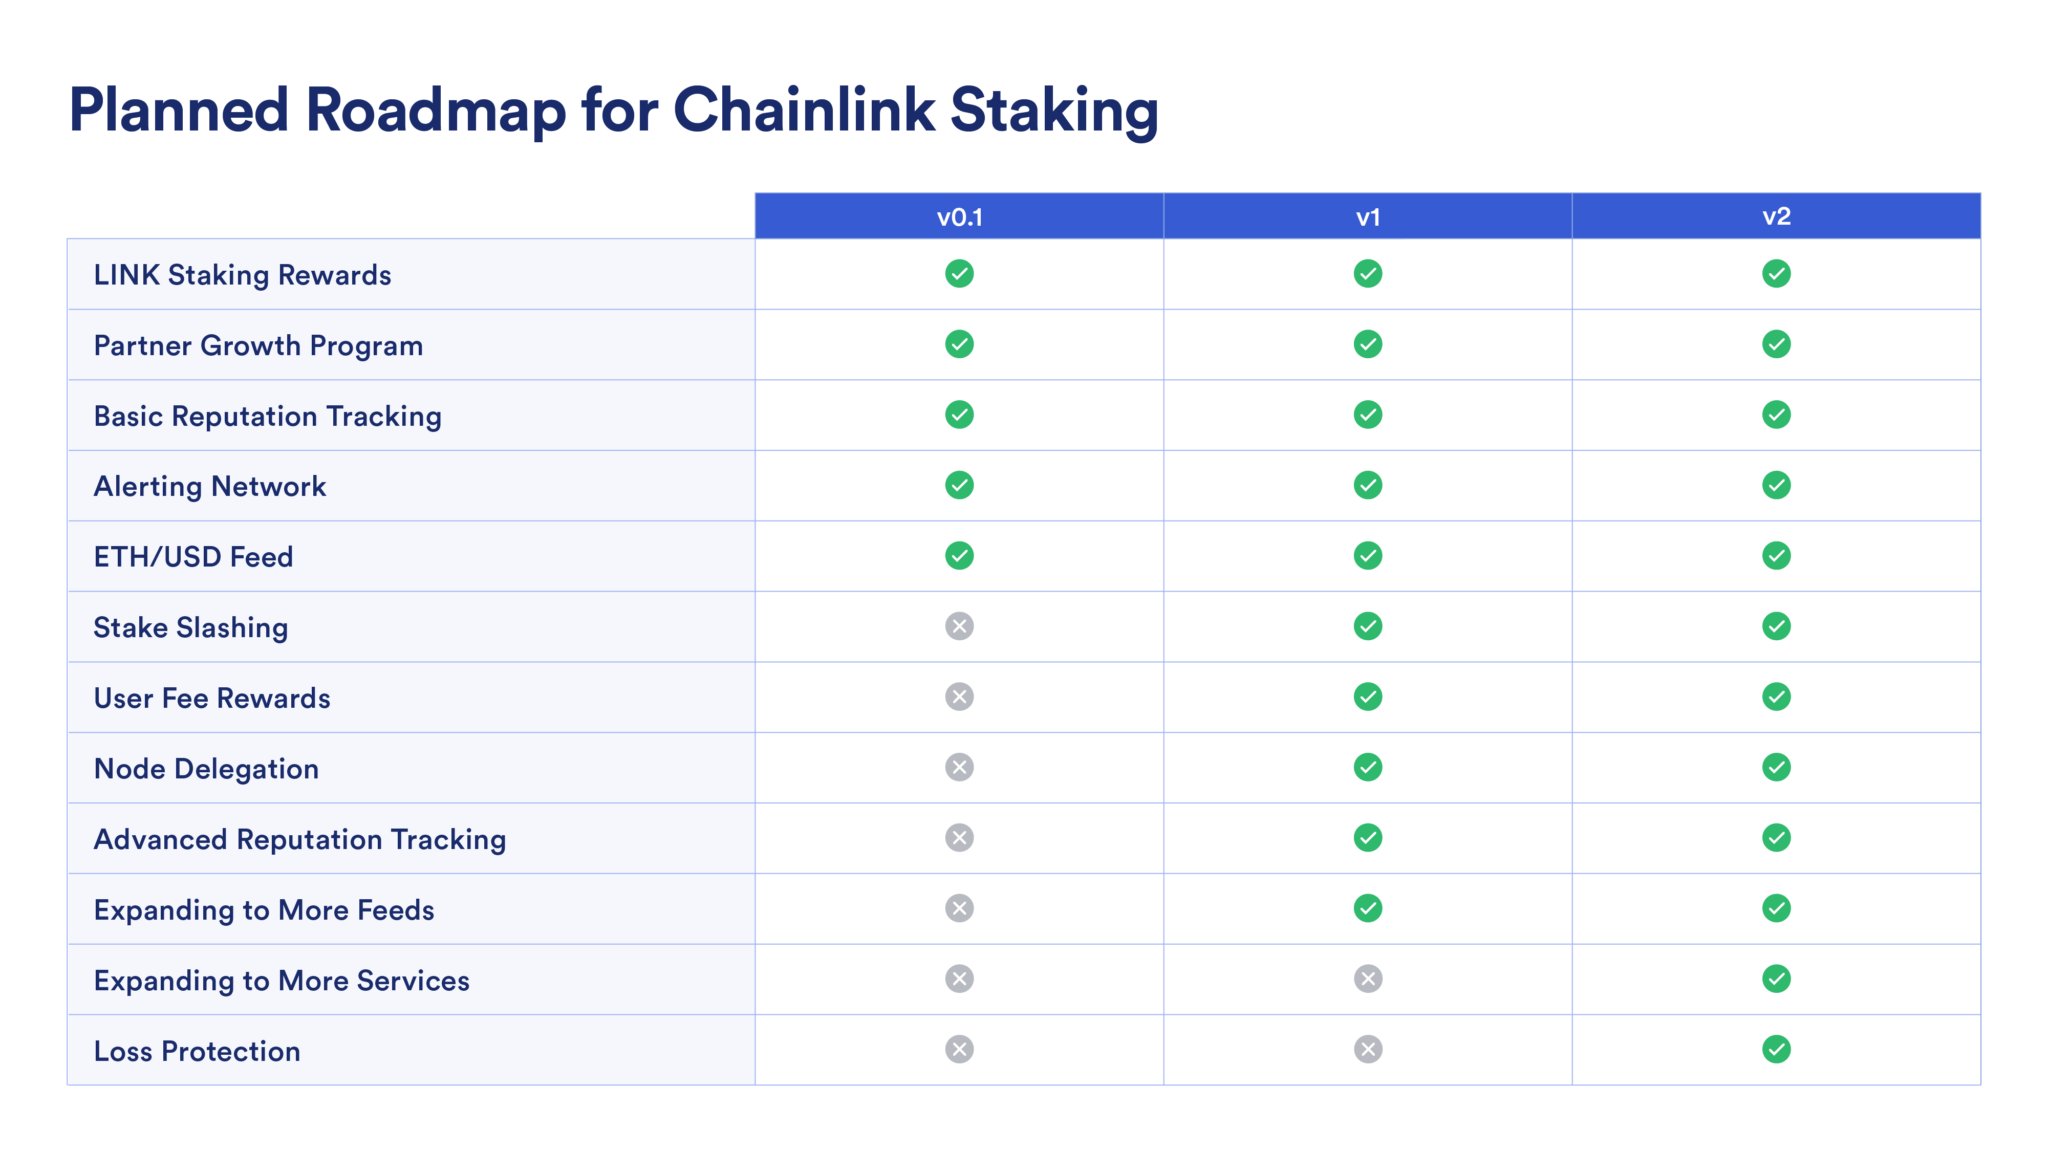 Chainlink staking roadmap